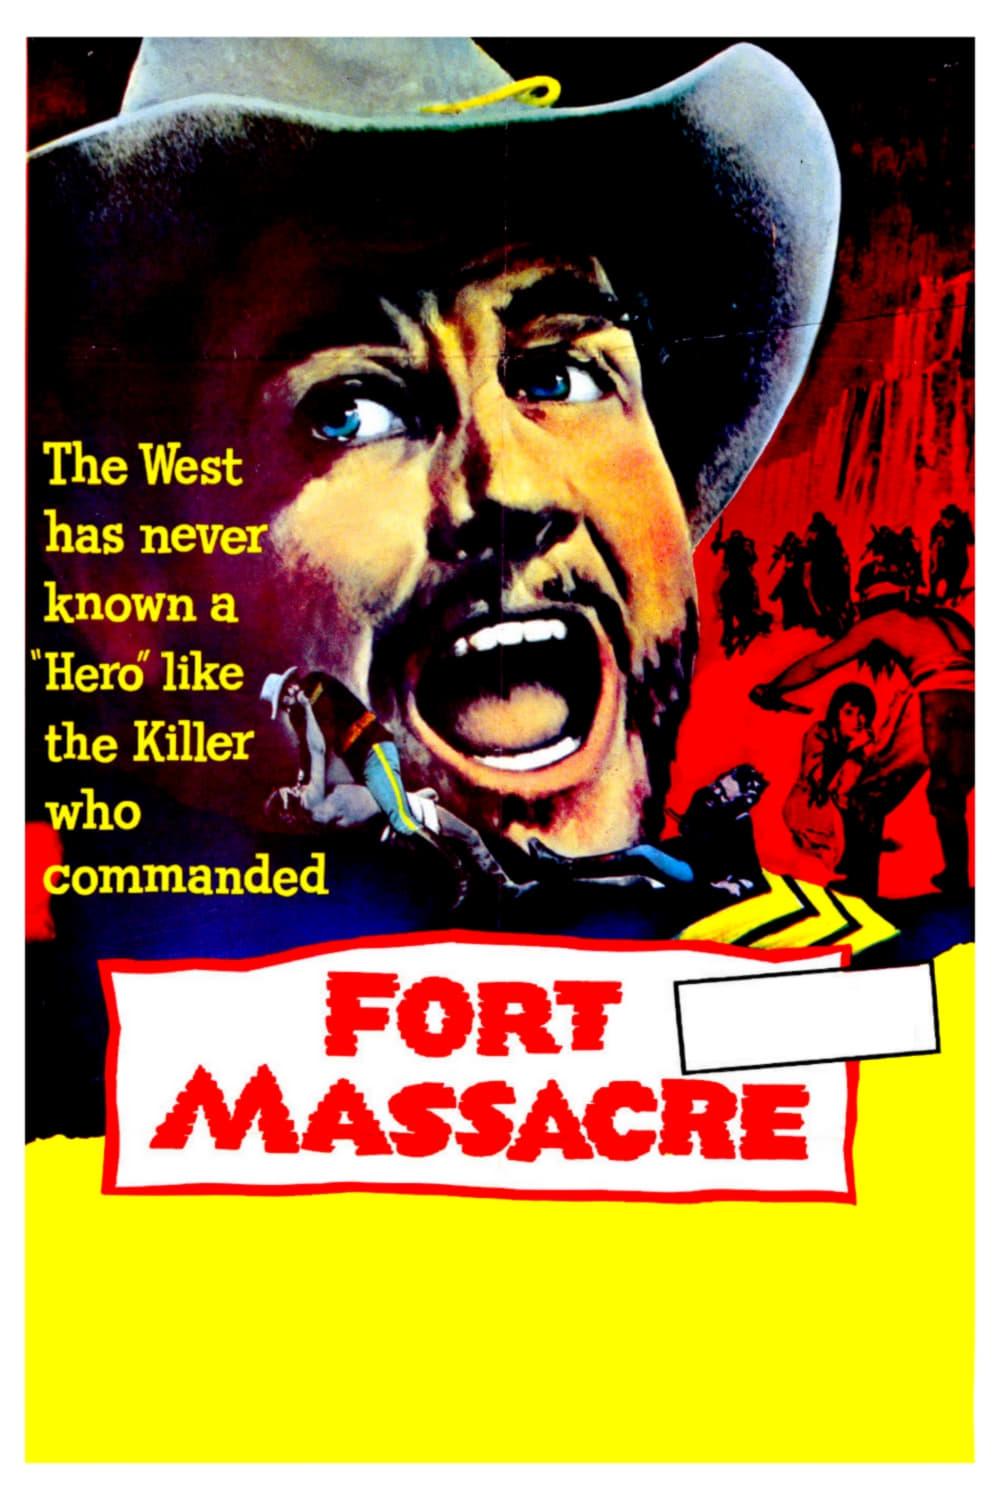 Fort Massacre poster